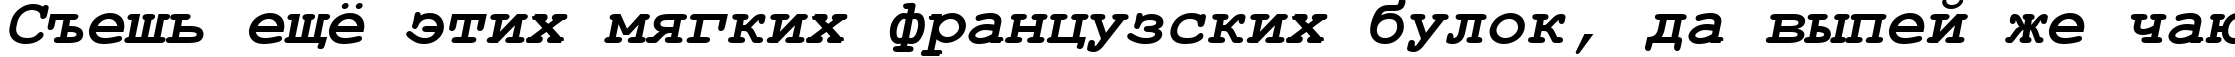 Пример написания шрифтом Courier New Cyr Bold Italic текста на русском